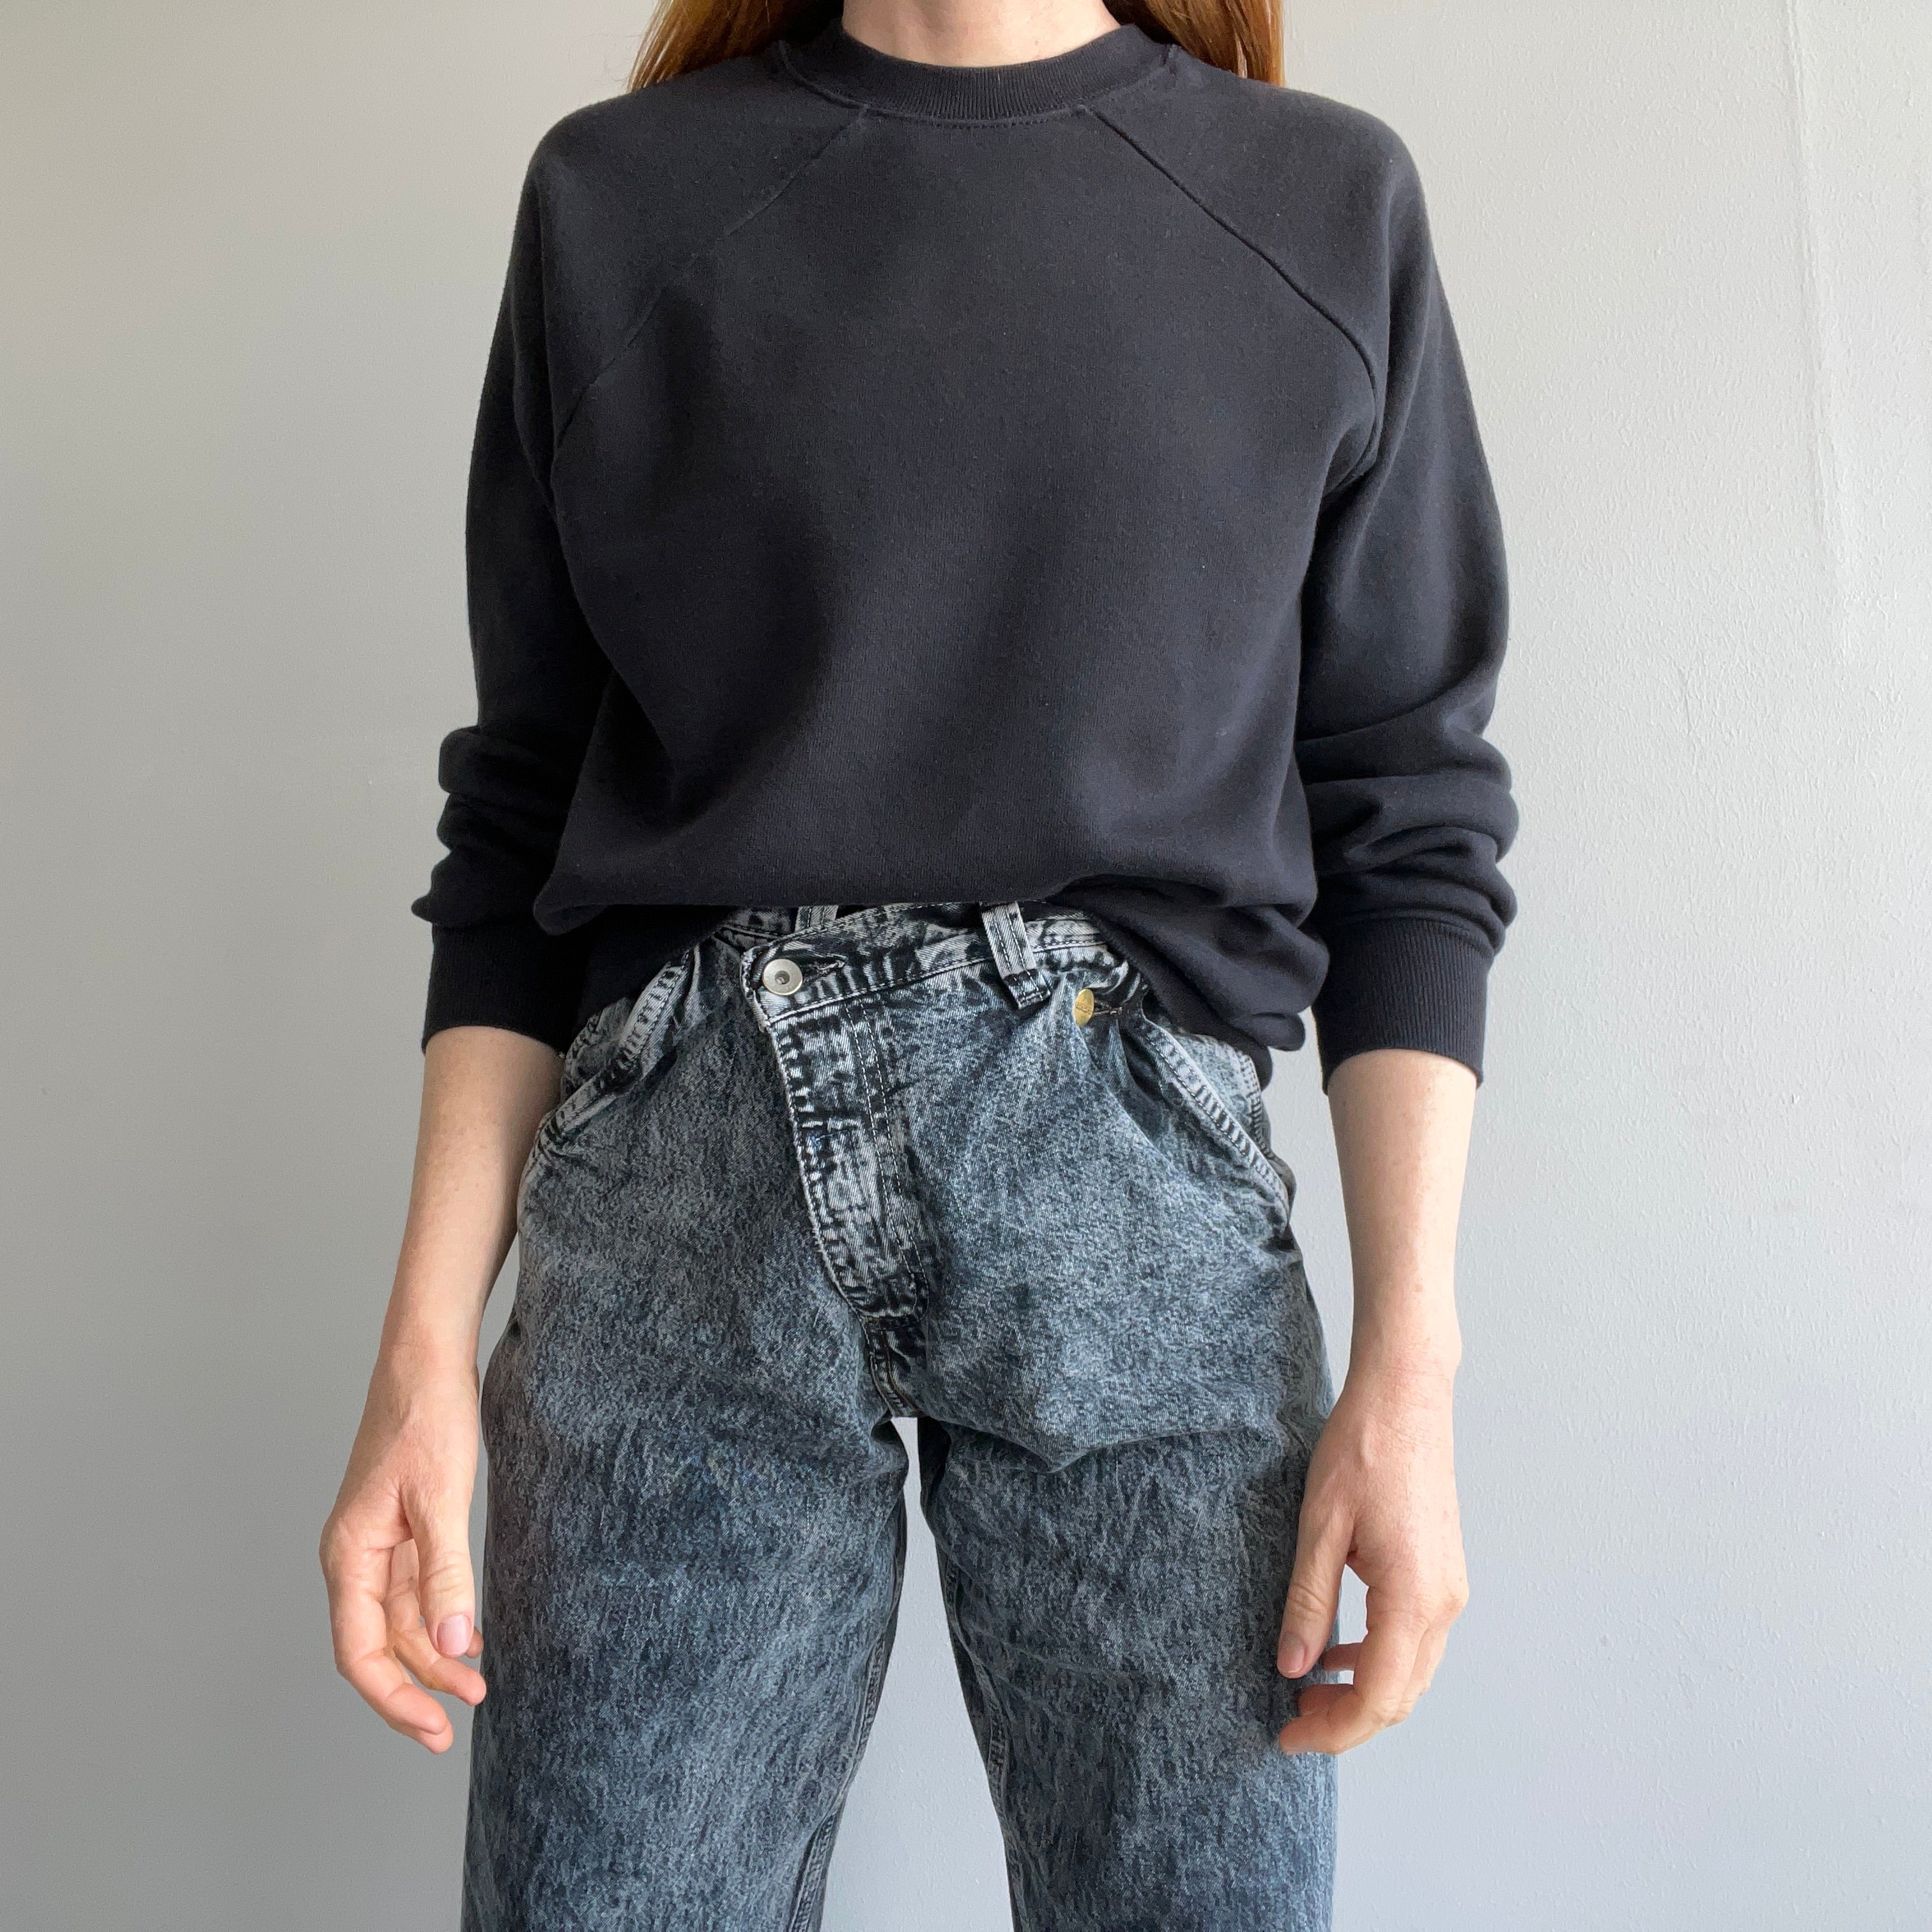 1980s Blank Black Raglan Sweatshirt